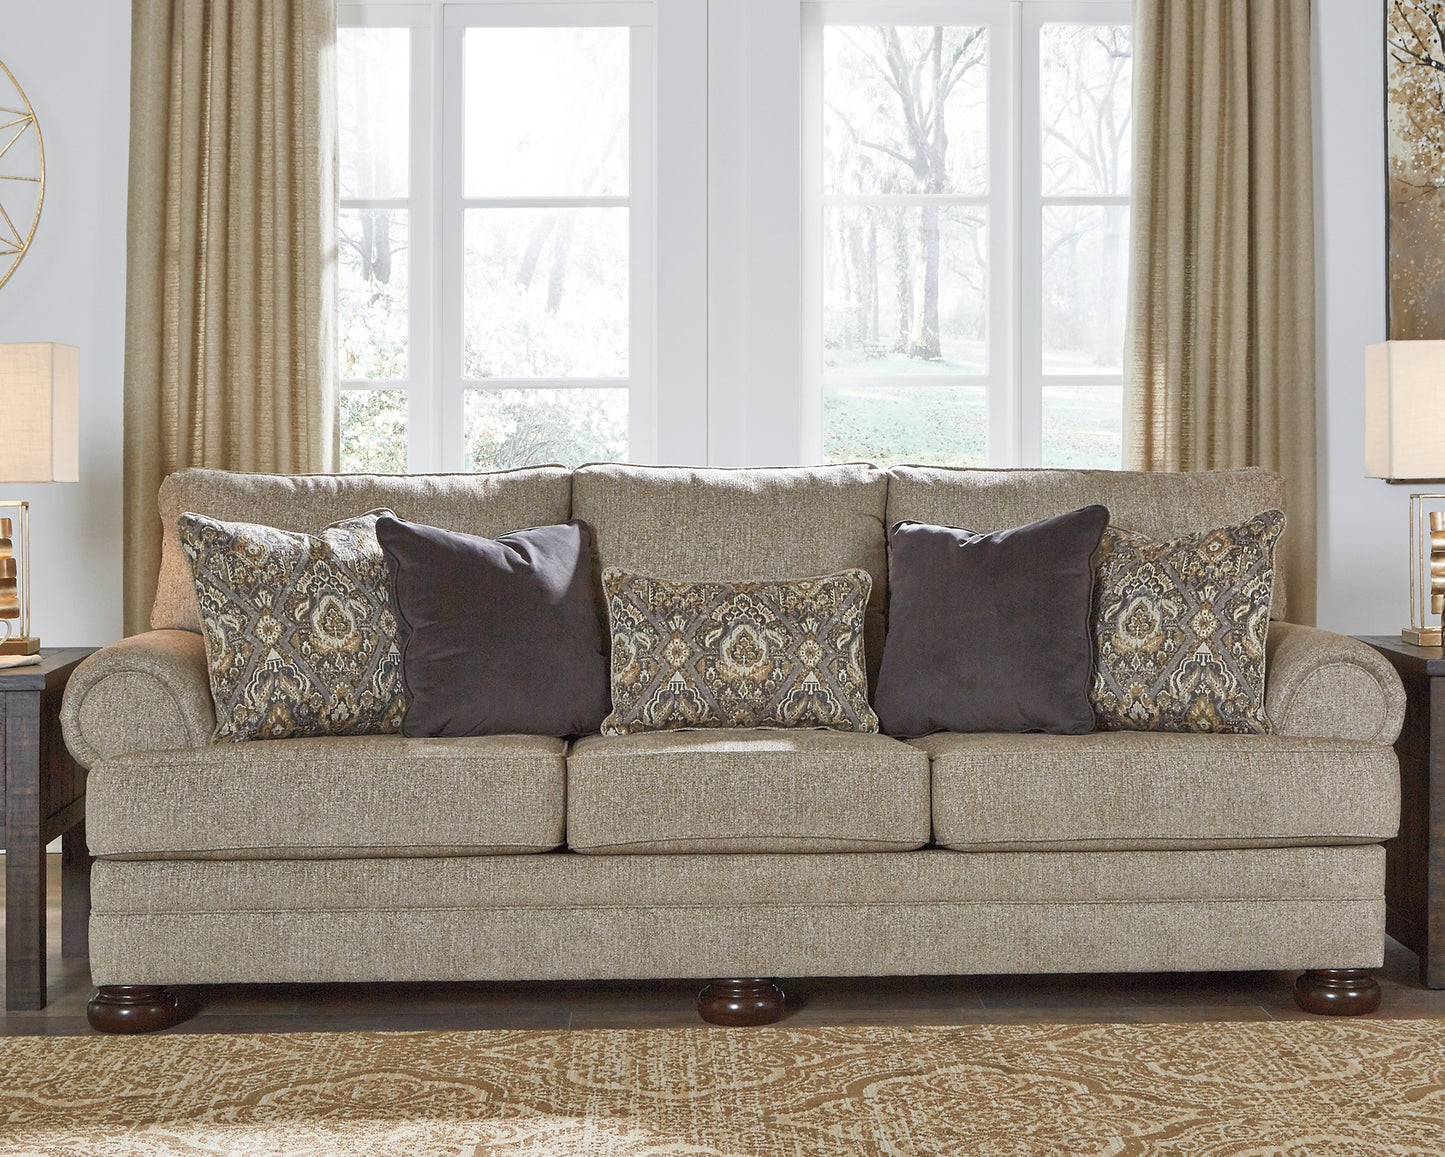 Kananwood Sofa, Loveseat, Chair and Ottoman Signature Design by Ashley®